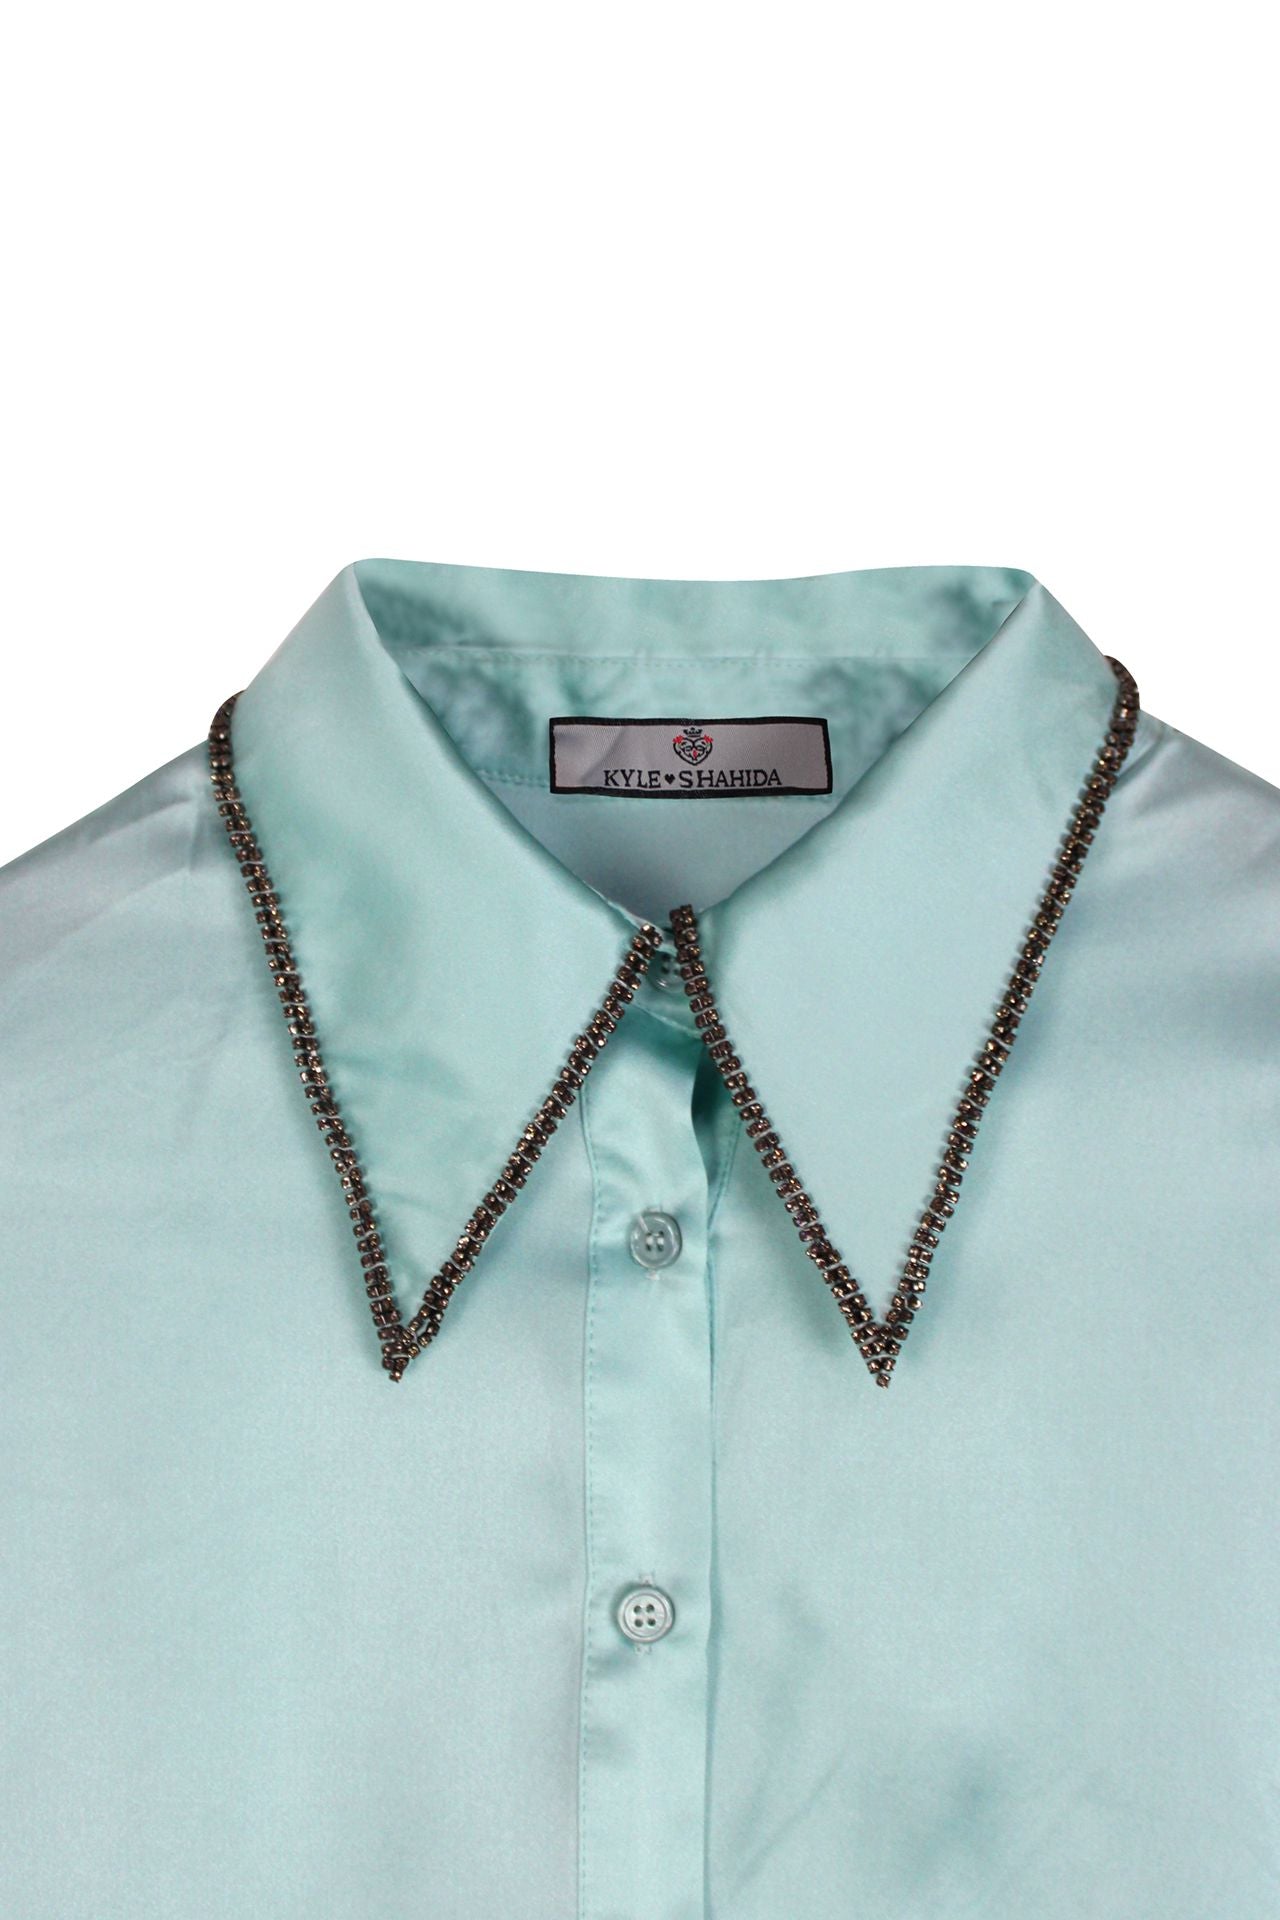 Designer-Button-Down-Shirt-In-Blue-By-Kyle-Richard